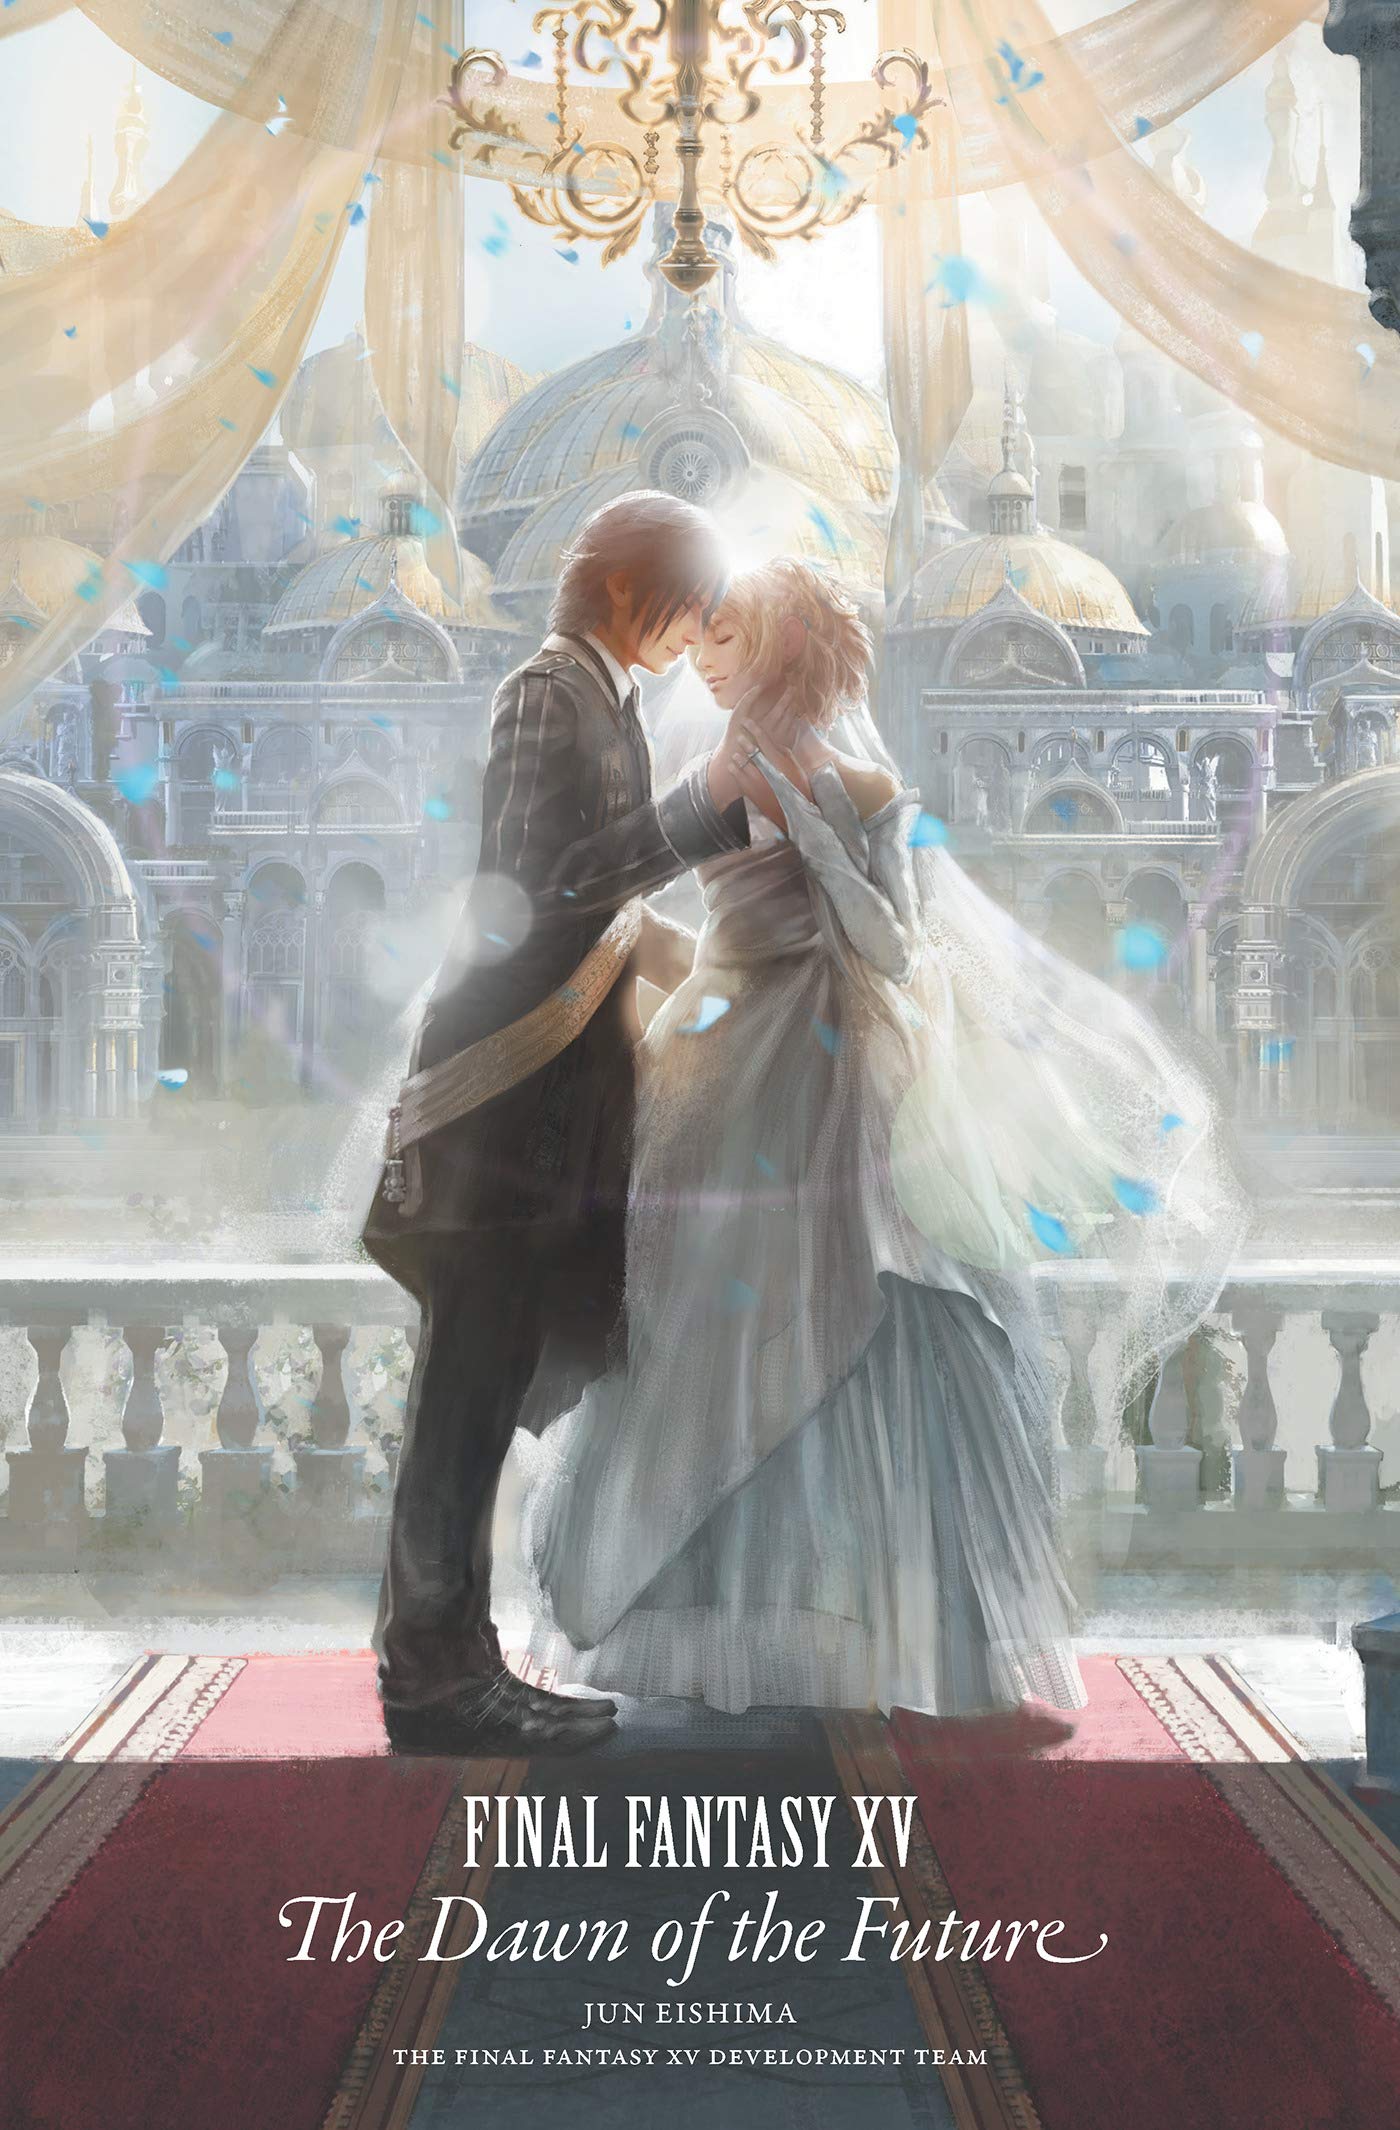 Crunchyroll Adds Final Fantasy XV Episode Ardyn Prologue & The